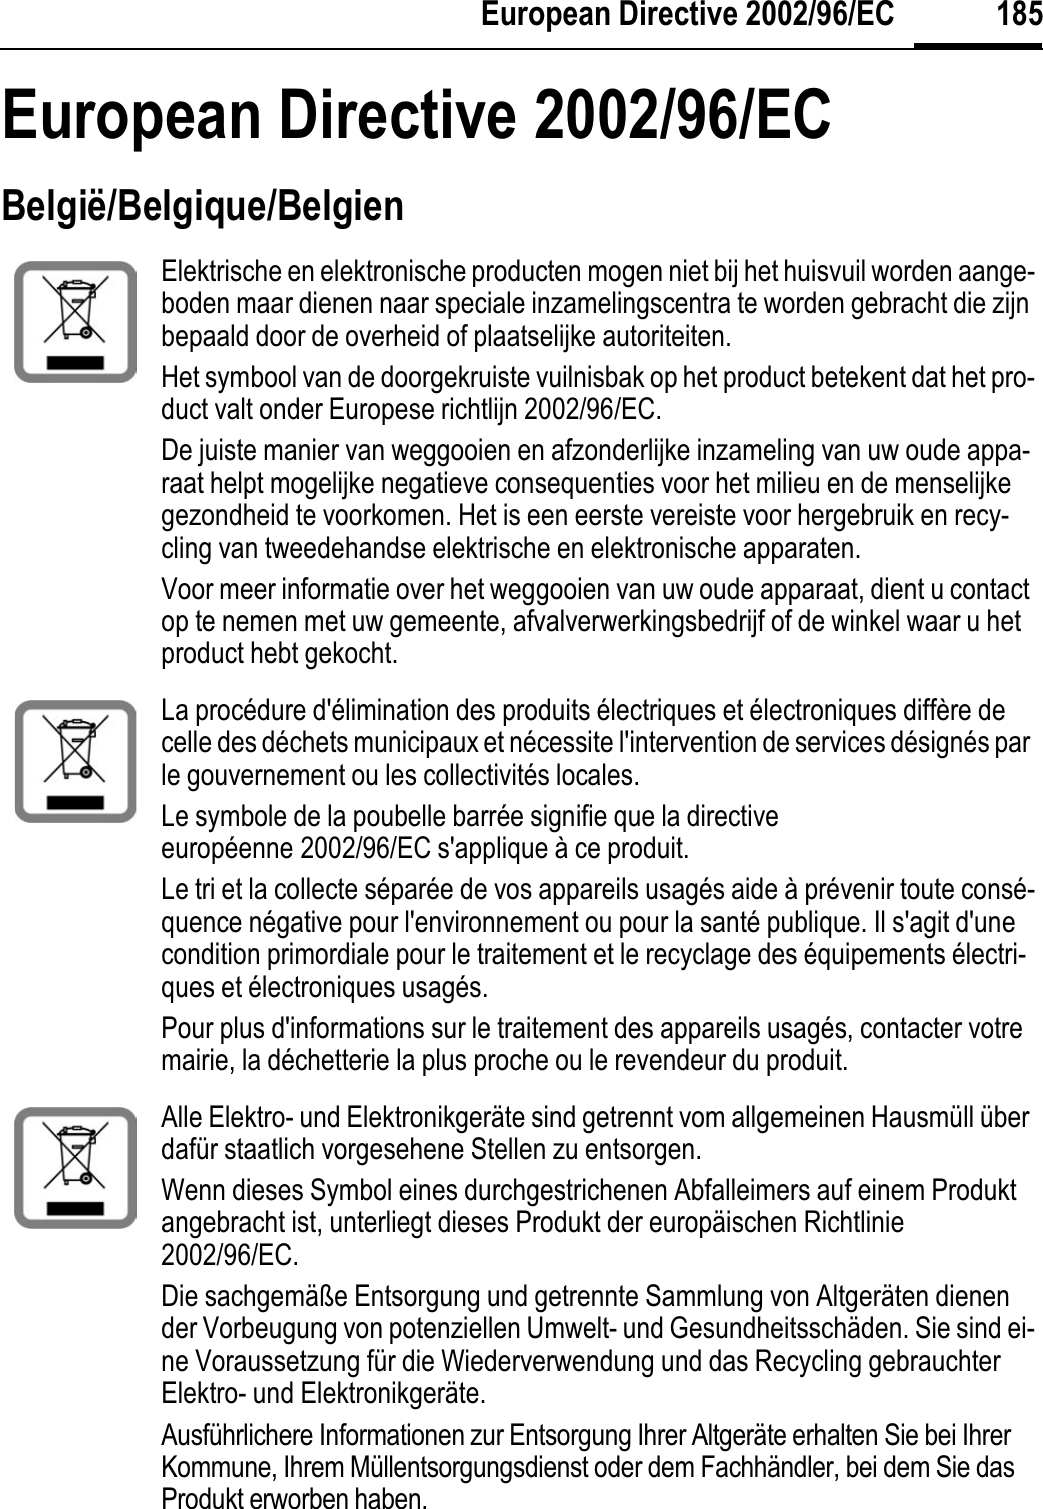 185European Directive 2002/96/ECEuropean Directive 2002/96/ECBelgië/Belgique/BelgienElektrische en elektronische producten mogen niet bij het huisvuil worden aange-boden maar dienen naar speciale inzamelingscentra te worden gebracht die zijn bepaald door de overheid of plaatselijke autoriteiten.Het symbool van de doorgekruiste vuilnisbak op het product betekent dat het pro-duct valt onder Europese richtlijn 2002/96/EC.De juiste manier van weggooien en afzonderlijke inzameling van uw oude appa-raat helpt mogelijke negatieve consequenties voor het milieu en de menselijke gezondheid te voorkomen. Het is een eerste vereiste voor hergebruik en recy-cling van tweedehandse elektrische en elektronische apparaten.Voor meer informatie over het weggooien van uw oude apparaat, dient u contact op te nemen met uw gemeente, afvalverwerkingsbedrijf of de winkel waar u het product hebt gekocht.La procédure d&apos;élimination des produits électriques et électroniques diffère de celle des déchets municipaux et nécessite l&apos;intervention de services désignés par le gouvernement ou les collectivités locales.Le symbole de la poubelle barrée signifie que la directive européenne 2002/96/EC s&apos;applique à ce produit.Le tri et la collecte séparée de vos appareils usagés aide à prévenir toute consé-quence négative pour l&apos;environnement ou pour la santé publique. Il s&apos;agit d&apos;une condition primordiale pour le traitement et le recyclage des équipements électri-ques et électroniques usagés.Pour plus d&apos;informations sur le traitement des appareils usagés, contacter votre mairie, la déchetterie la plus proche ou le revendeur du produit.Alle Elektro- und Elektronikgeräte sind getrennt vom allgemeinen Hausmüll über dafür staatlich vorgesehene Stellen zu entsorgen.Wenn dieses Symbol eines durchgestrichenen Abfalleimers auf einem Produkt angebracht ist, unterliegt dieses Produkt der europäischen Richtlinie 2002/96/EC.Die sachgemäße Entsorgung und getrennte Sammlung von Altgeräten dienen der Vorbeugung von potenziellen Umwelt- und Gesundheitsschäden. Sie sind ei-ne Voraussetzung für die Wiederverwendung und das Recycling gebrauchter Elektro- und Elektronikgeräte.Ausführlichere Informationen zur Entsorgung Ihrer Altgeräte erhalten Sie bei Ihrer Kommune, Ihrem Müllentsorgungsdienst oder dem Fachhändler, bei dem Sie das Produkt erworben haben.